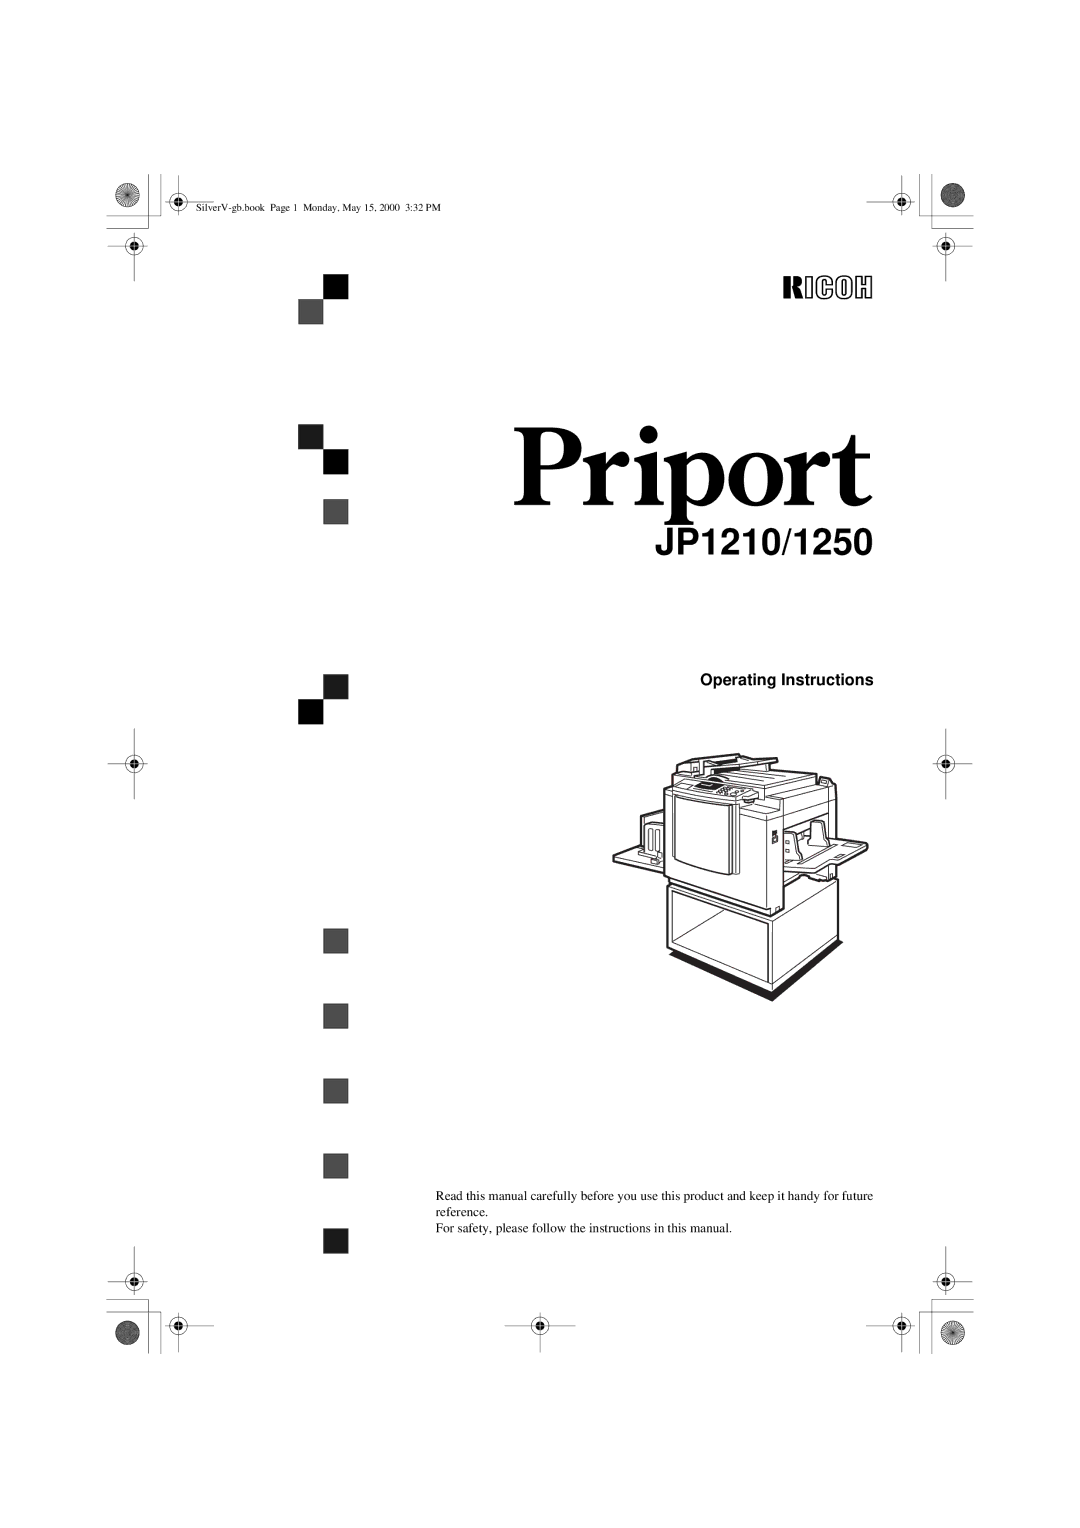 Ricoh JP1210/1250, Priport manual Operating Instructions 